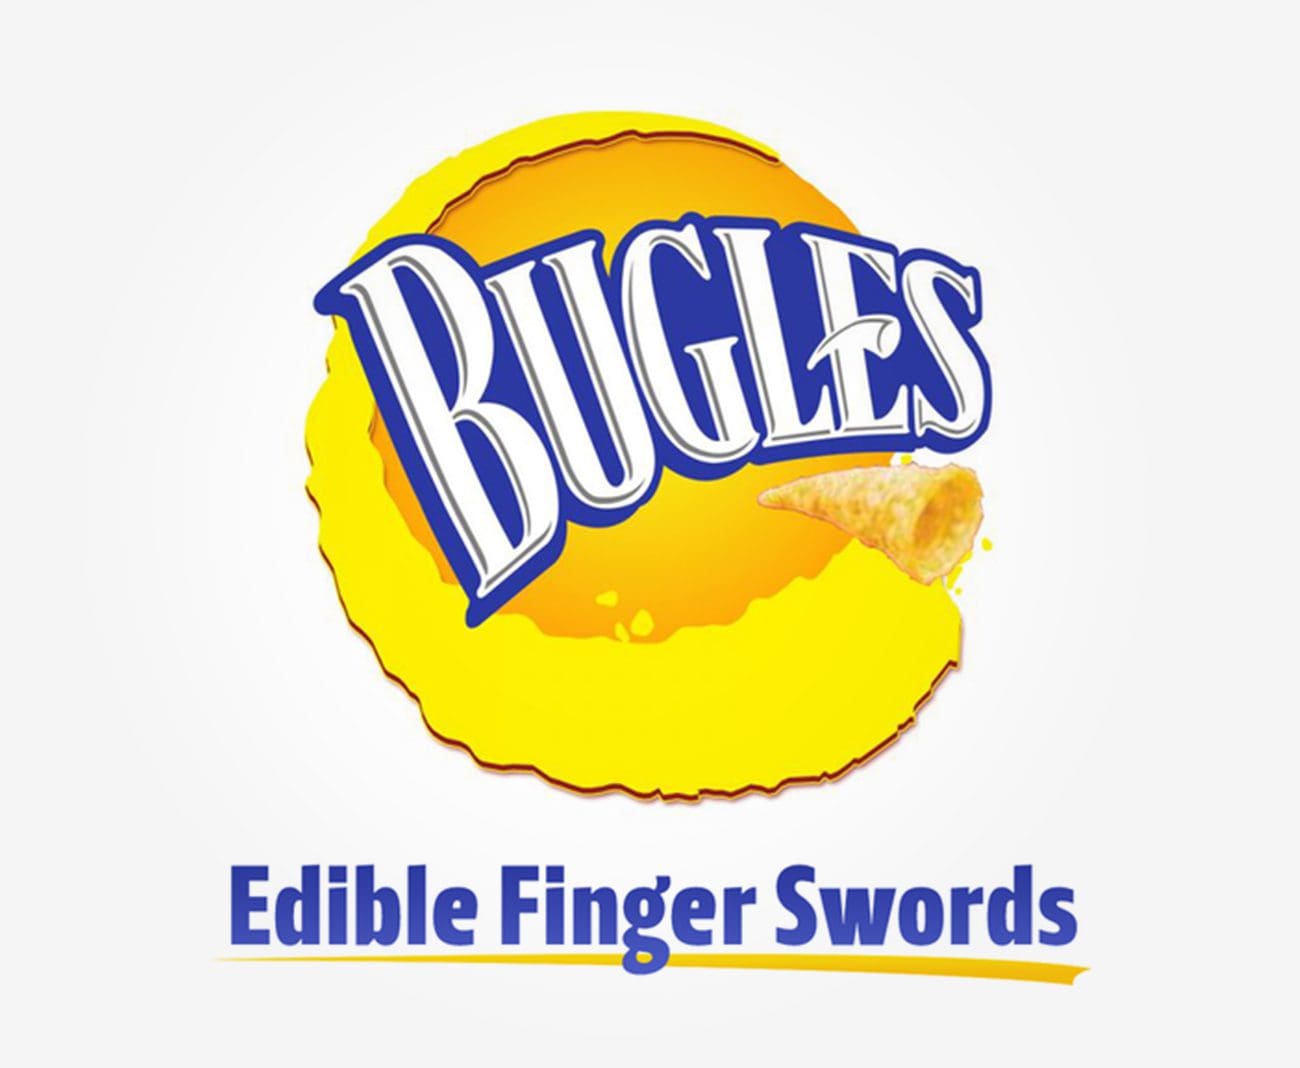 bugles slogan